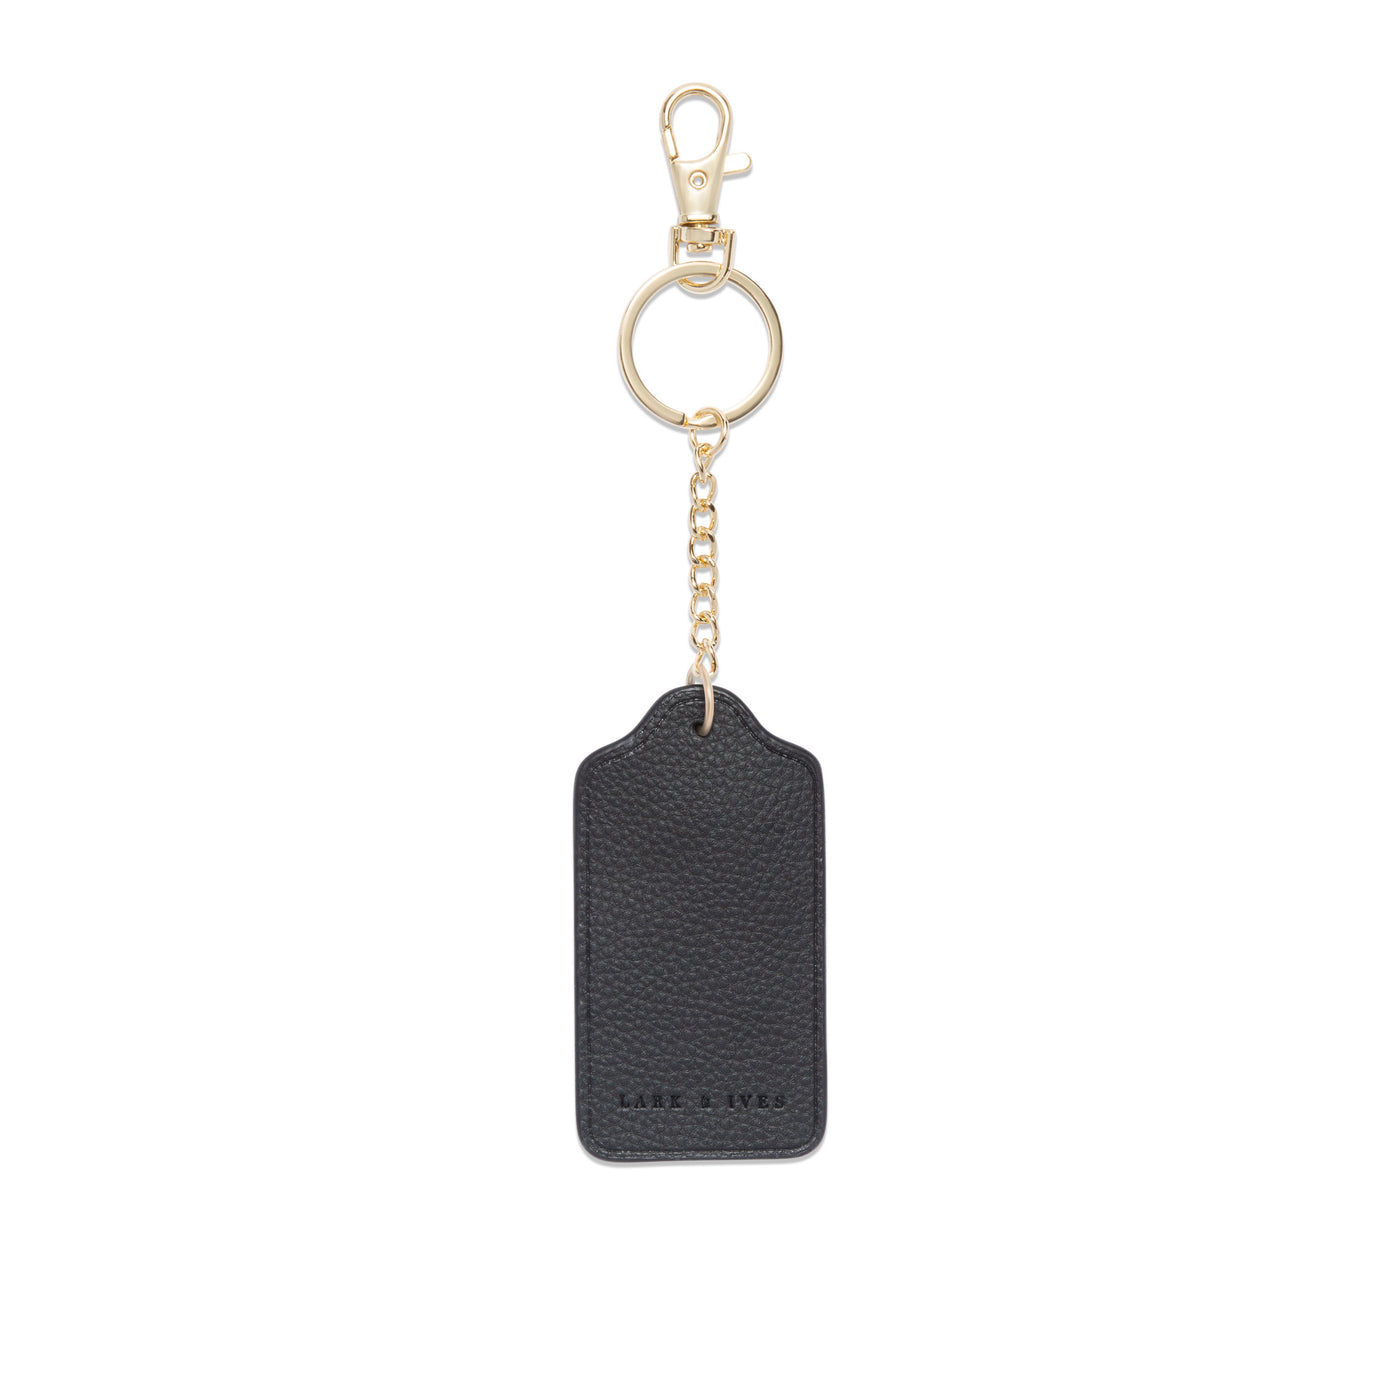 Lark and Ives / Vegan Leather Accessories / Keychain / Keyring / Tag Keychain / Minimal Accessories / Black